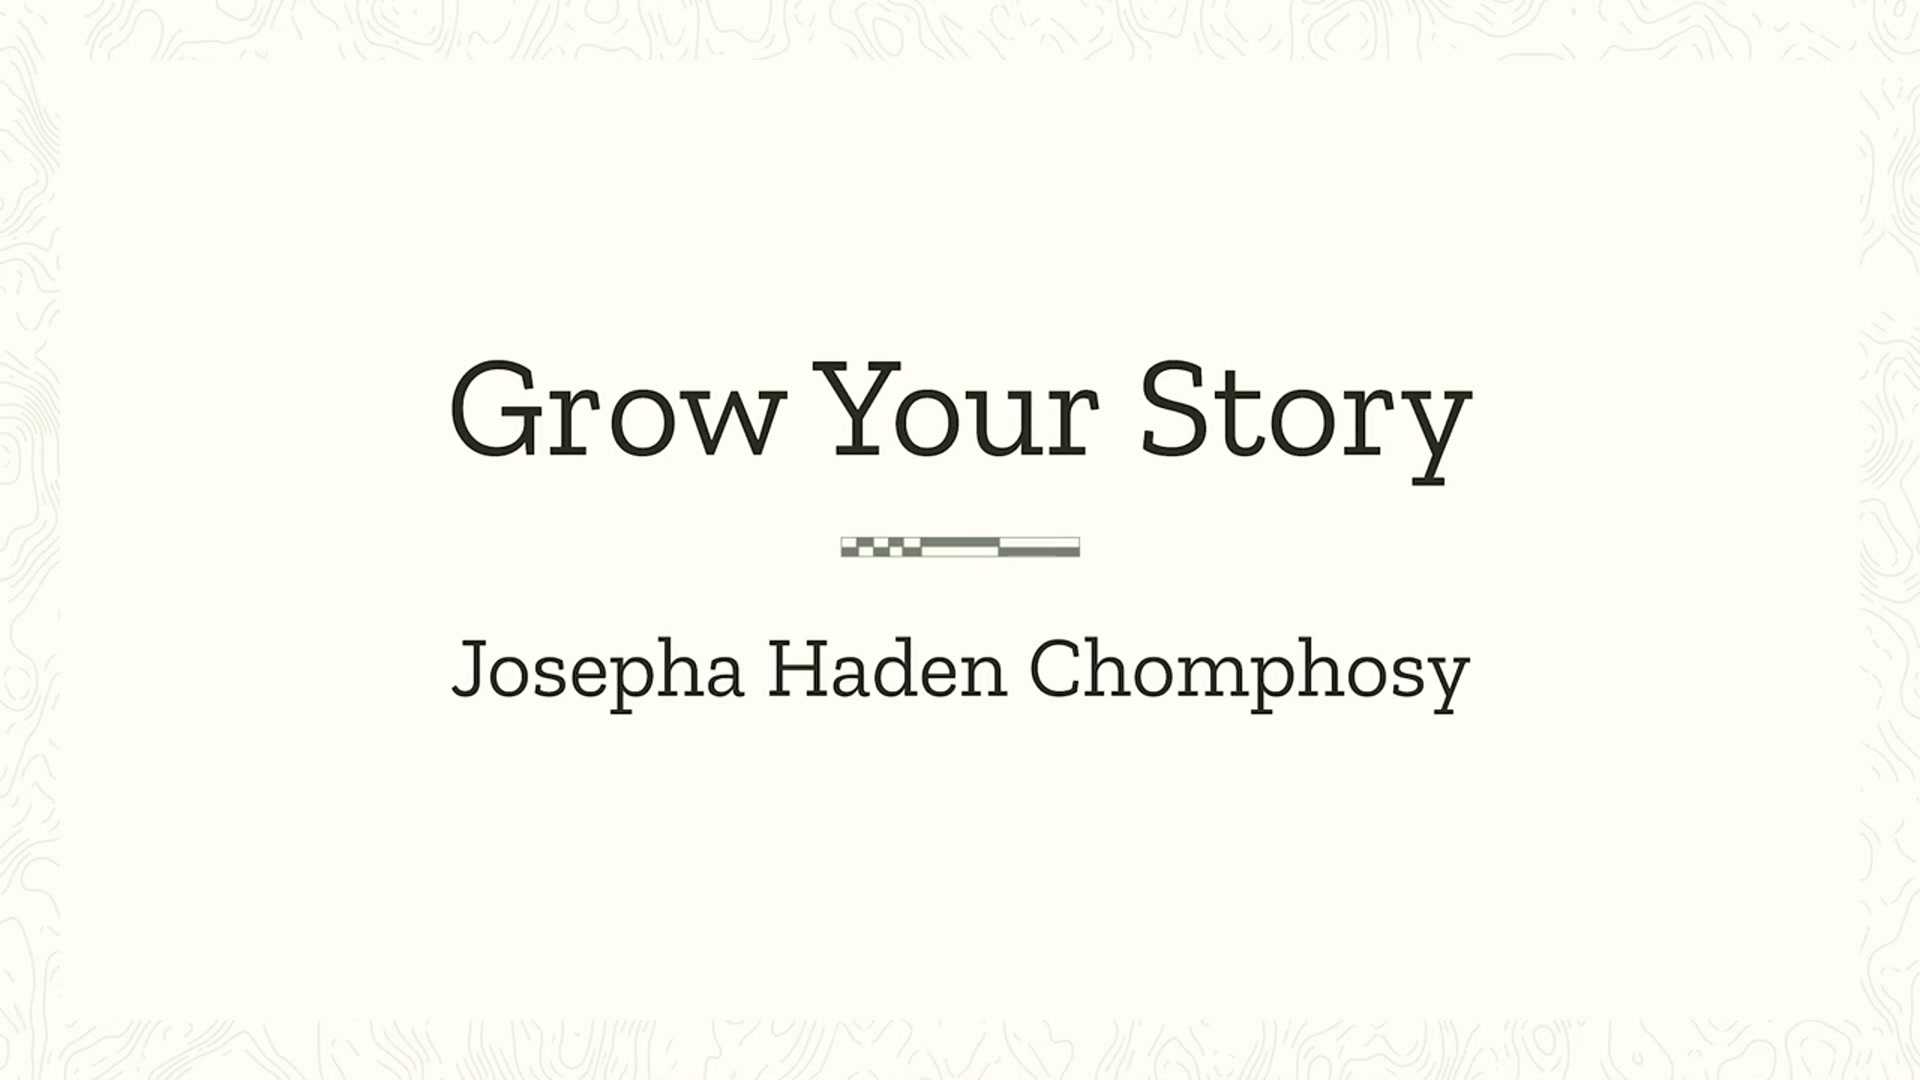 Josepha Haden Chomphosy: Grow your story